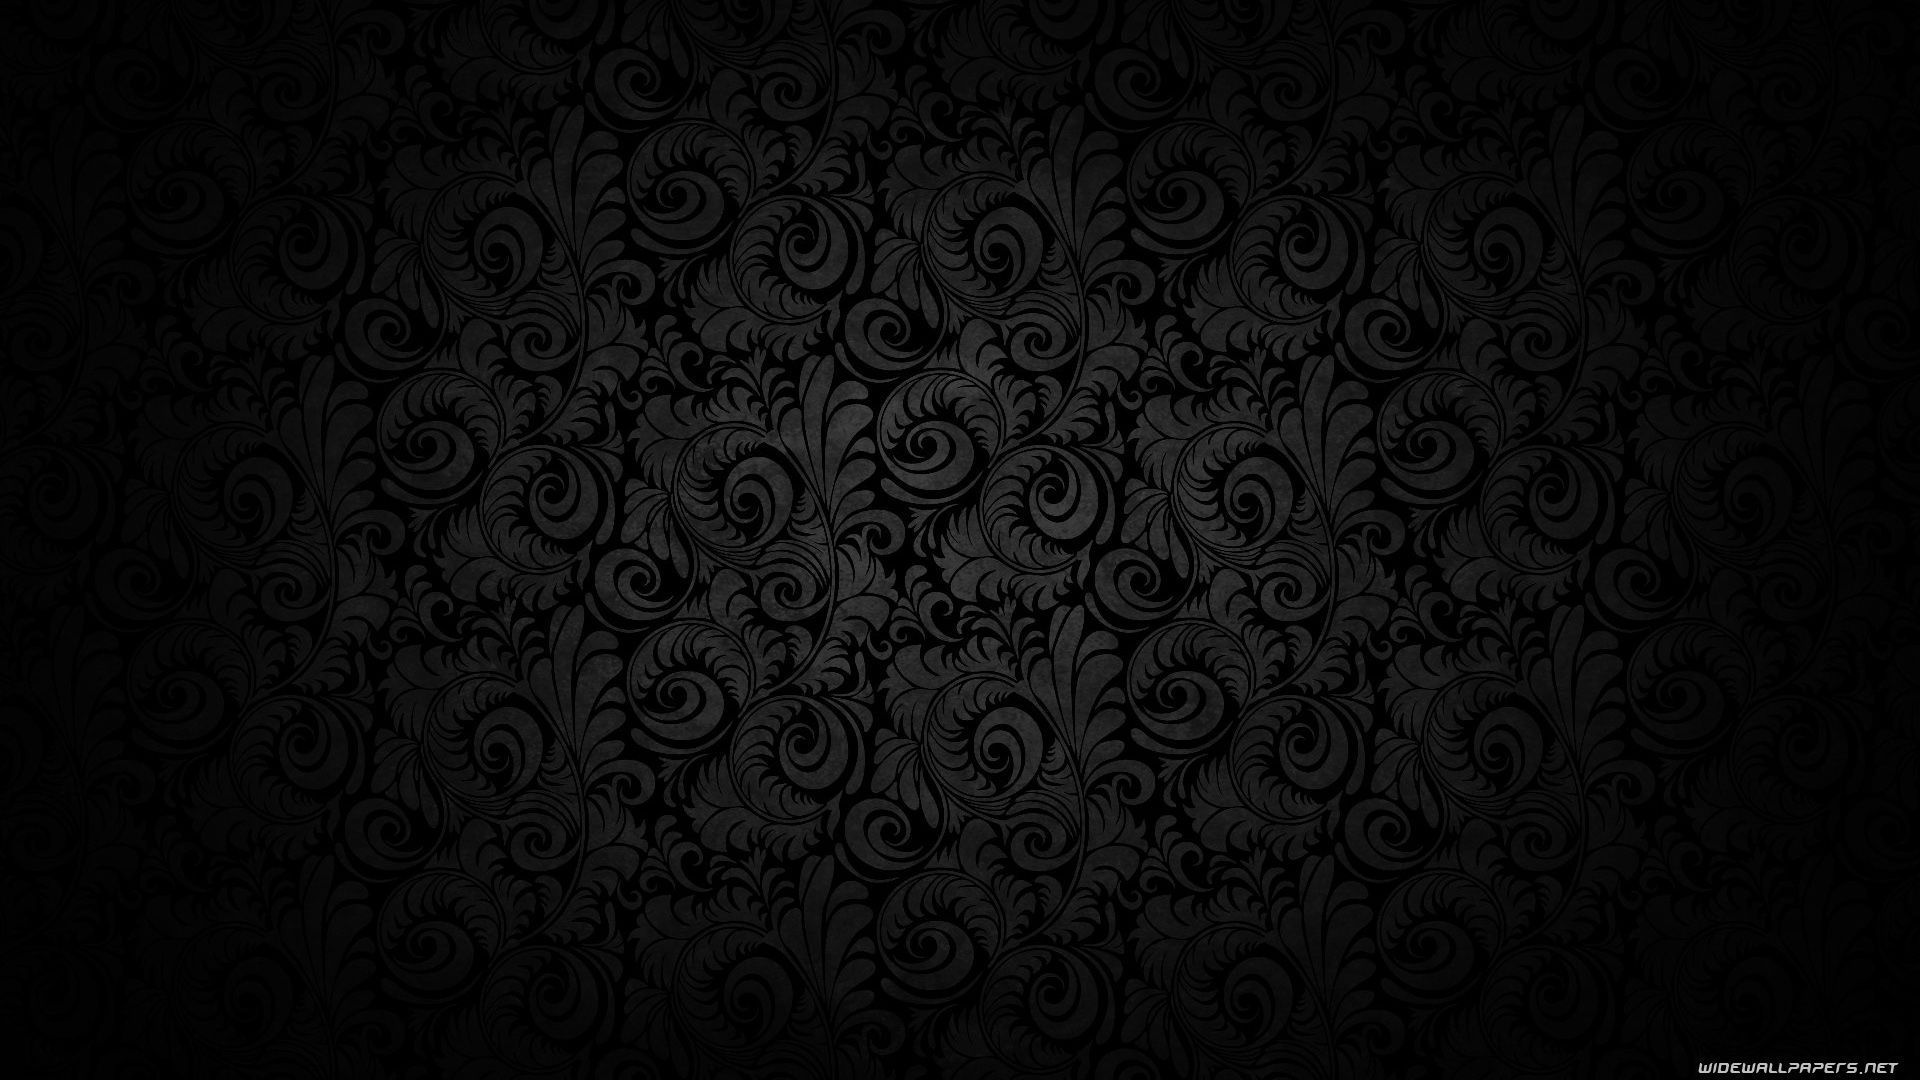 Reimbold Eye Group - background wide wallpaper 19201080 0051